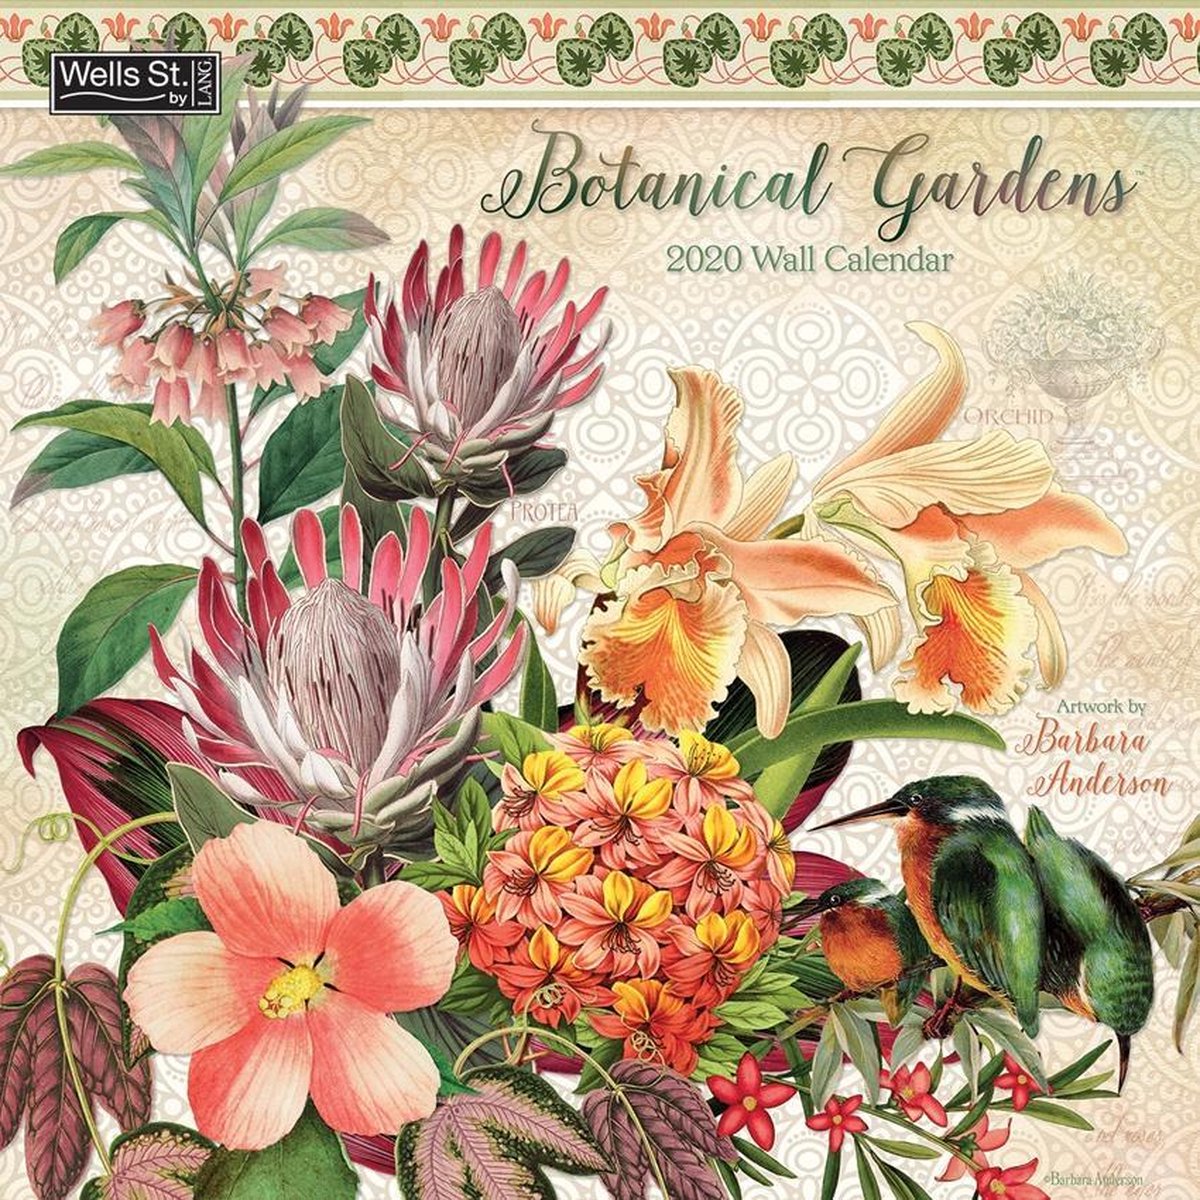 Botanical Gardens Kalender 2020 Wells St. by Lang